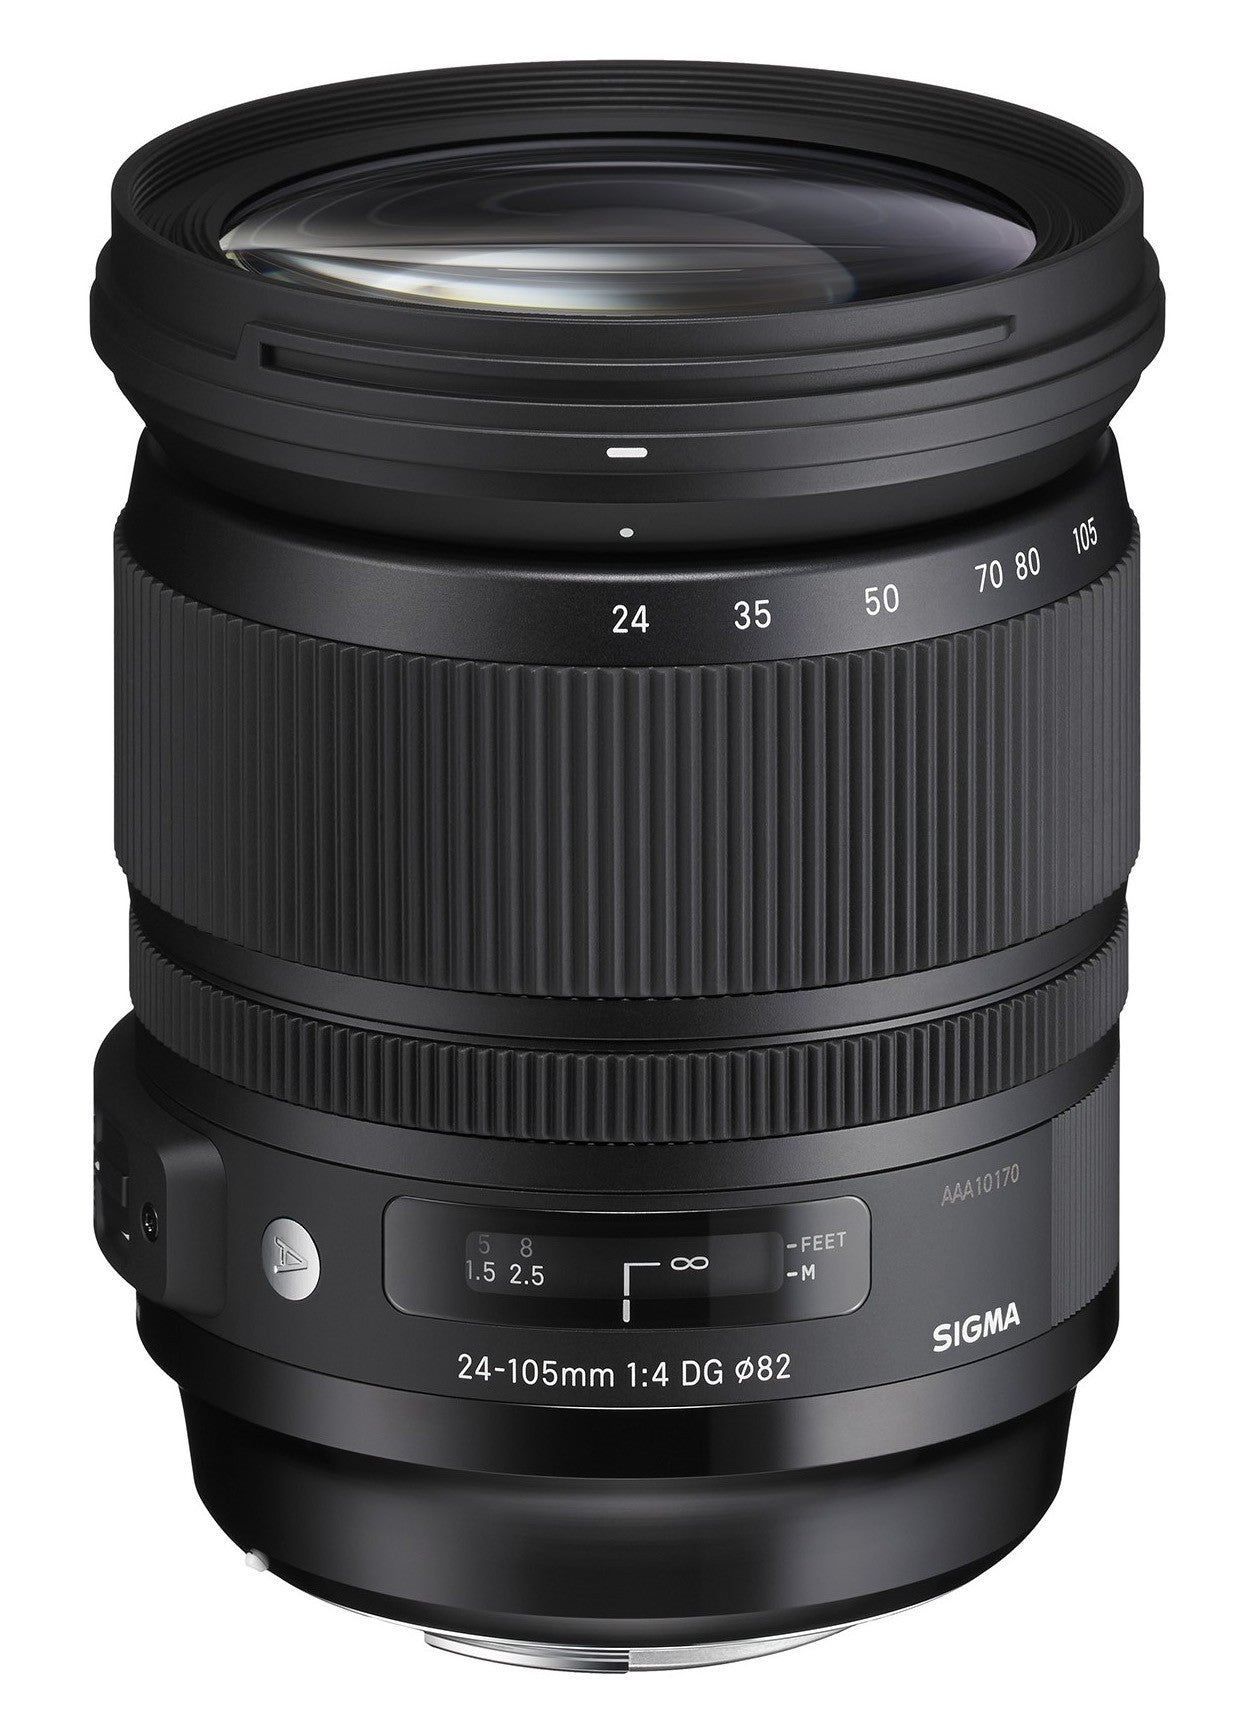 Sigma 24-105mm f/4 DG HSM Art Lens for Canon EF